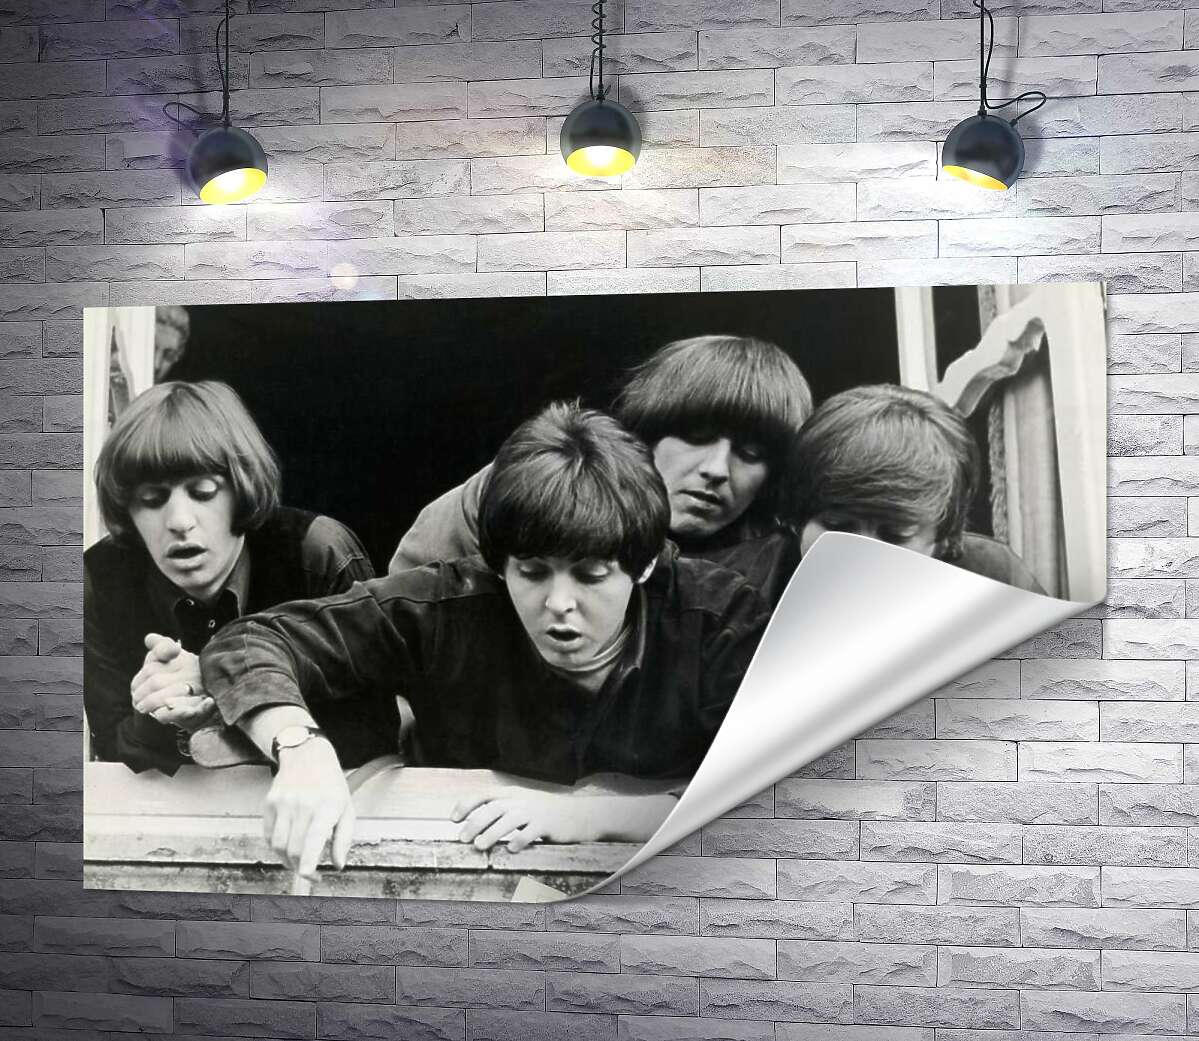 друк The Beatles дивляться з вікна вниз на вулицю